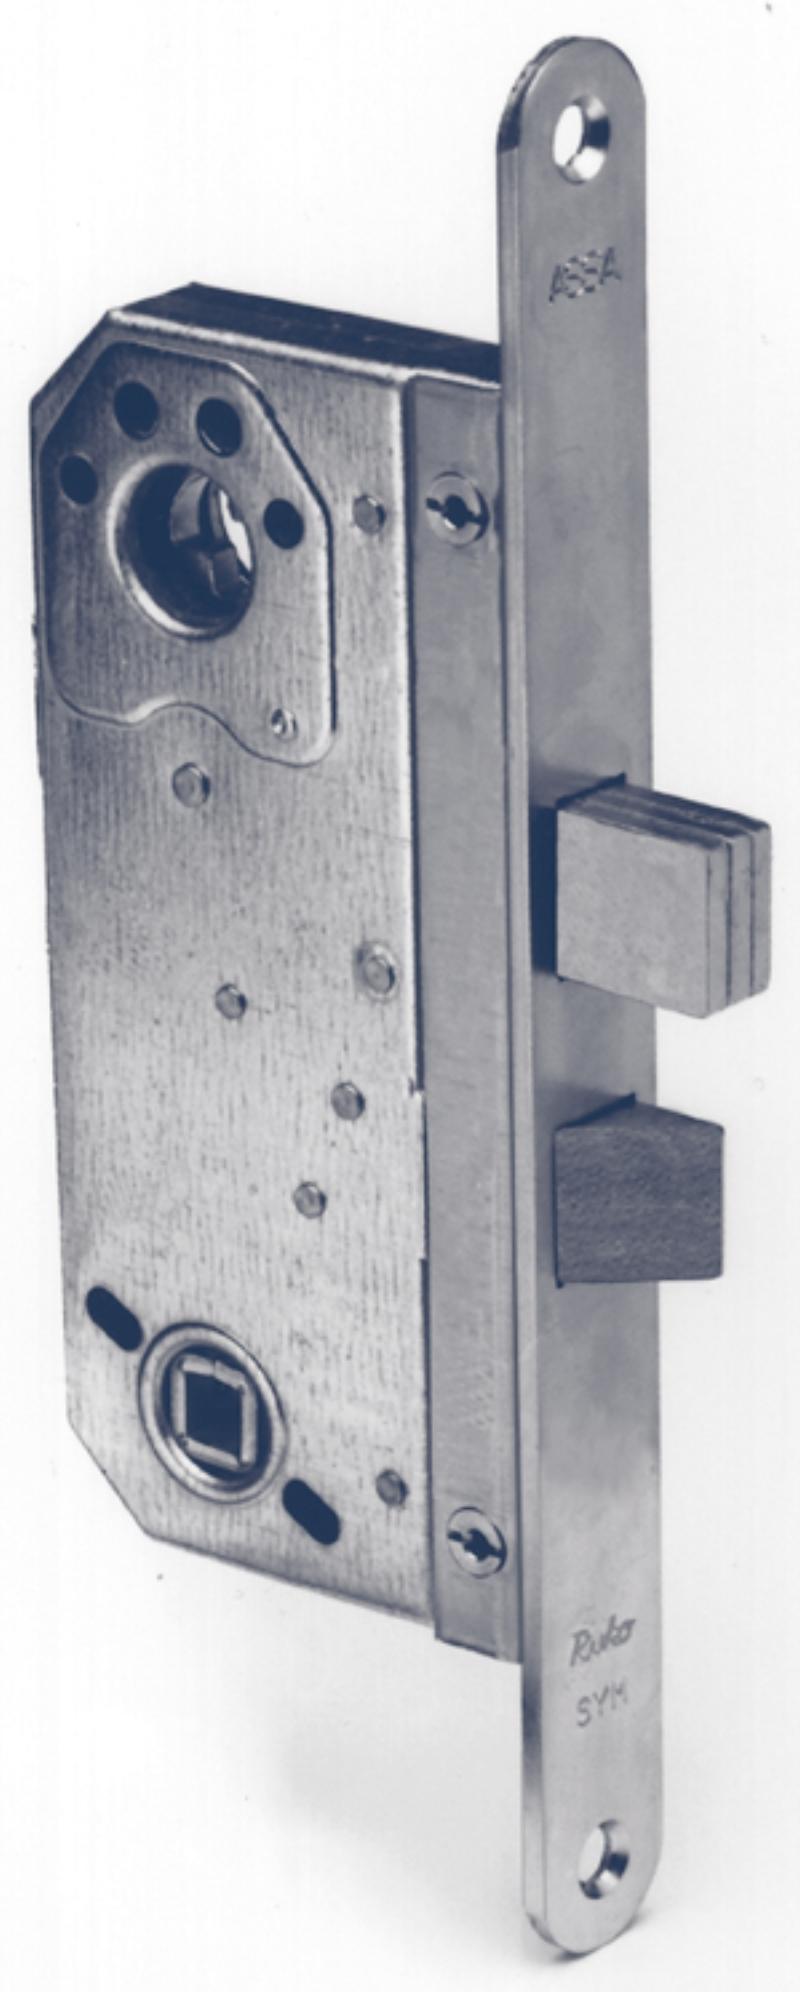 Assa låsbox 565/50 z V Micro M5 (521014)